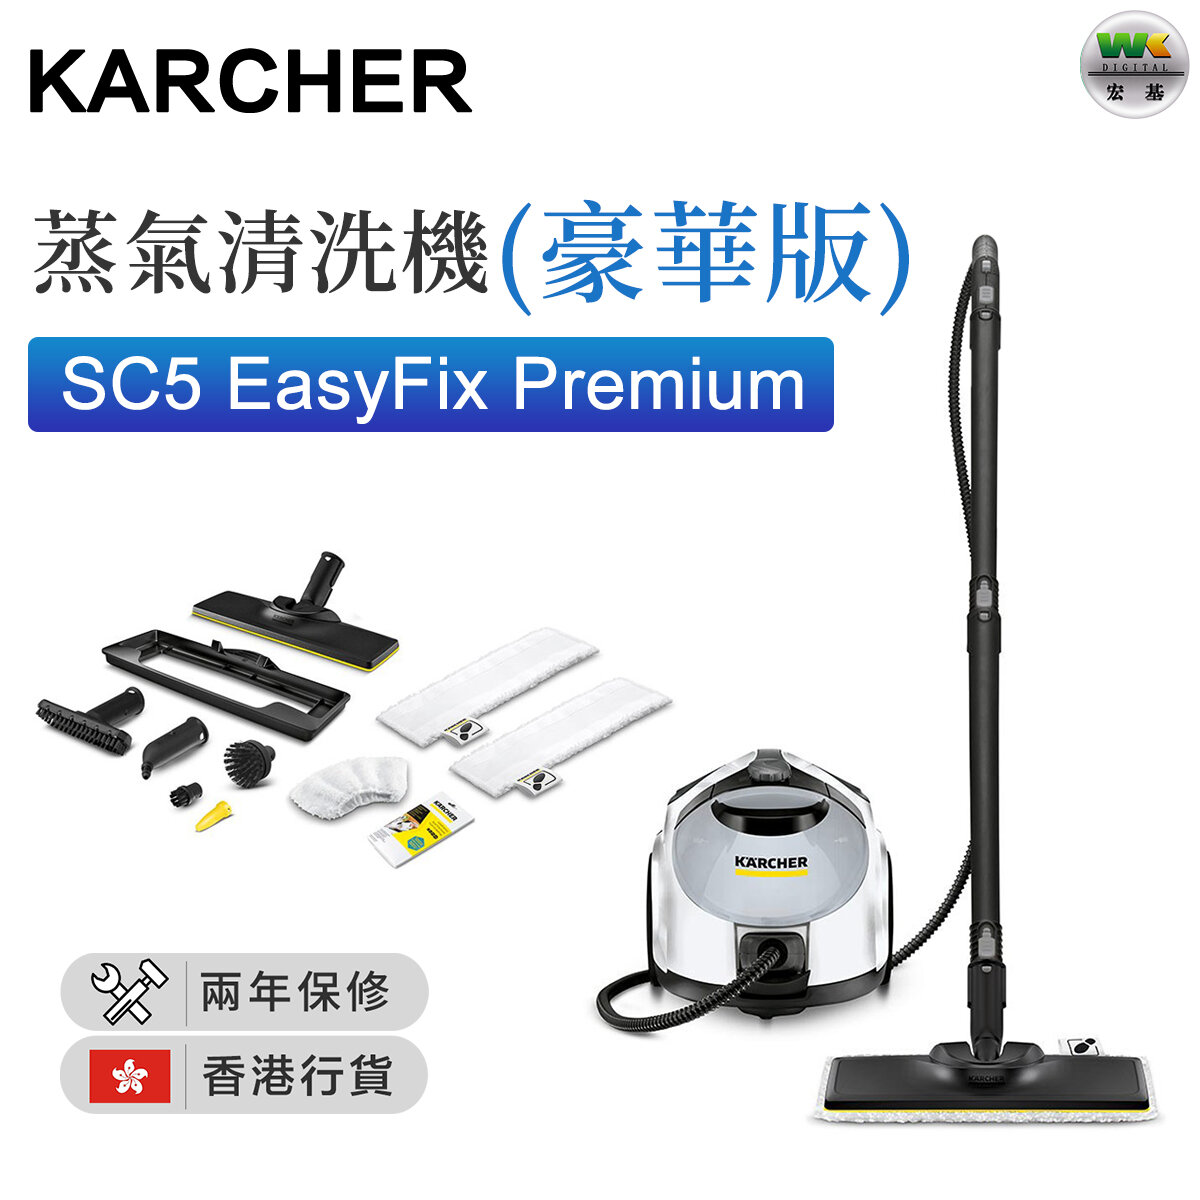 KÄRCHER  SC5 EasyFix Premium Steam Cleaner (Deluxe Edition) (Hong